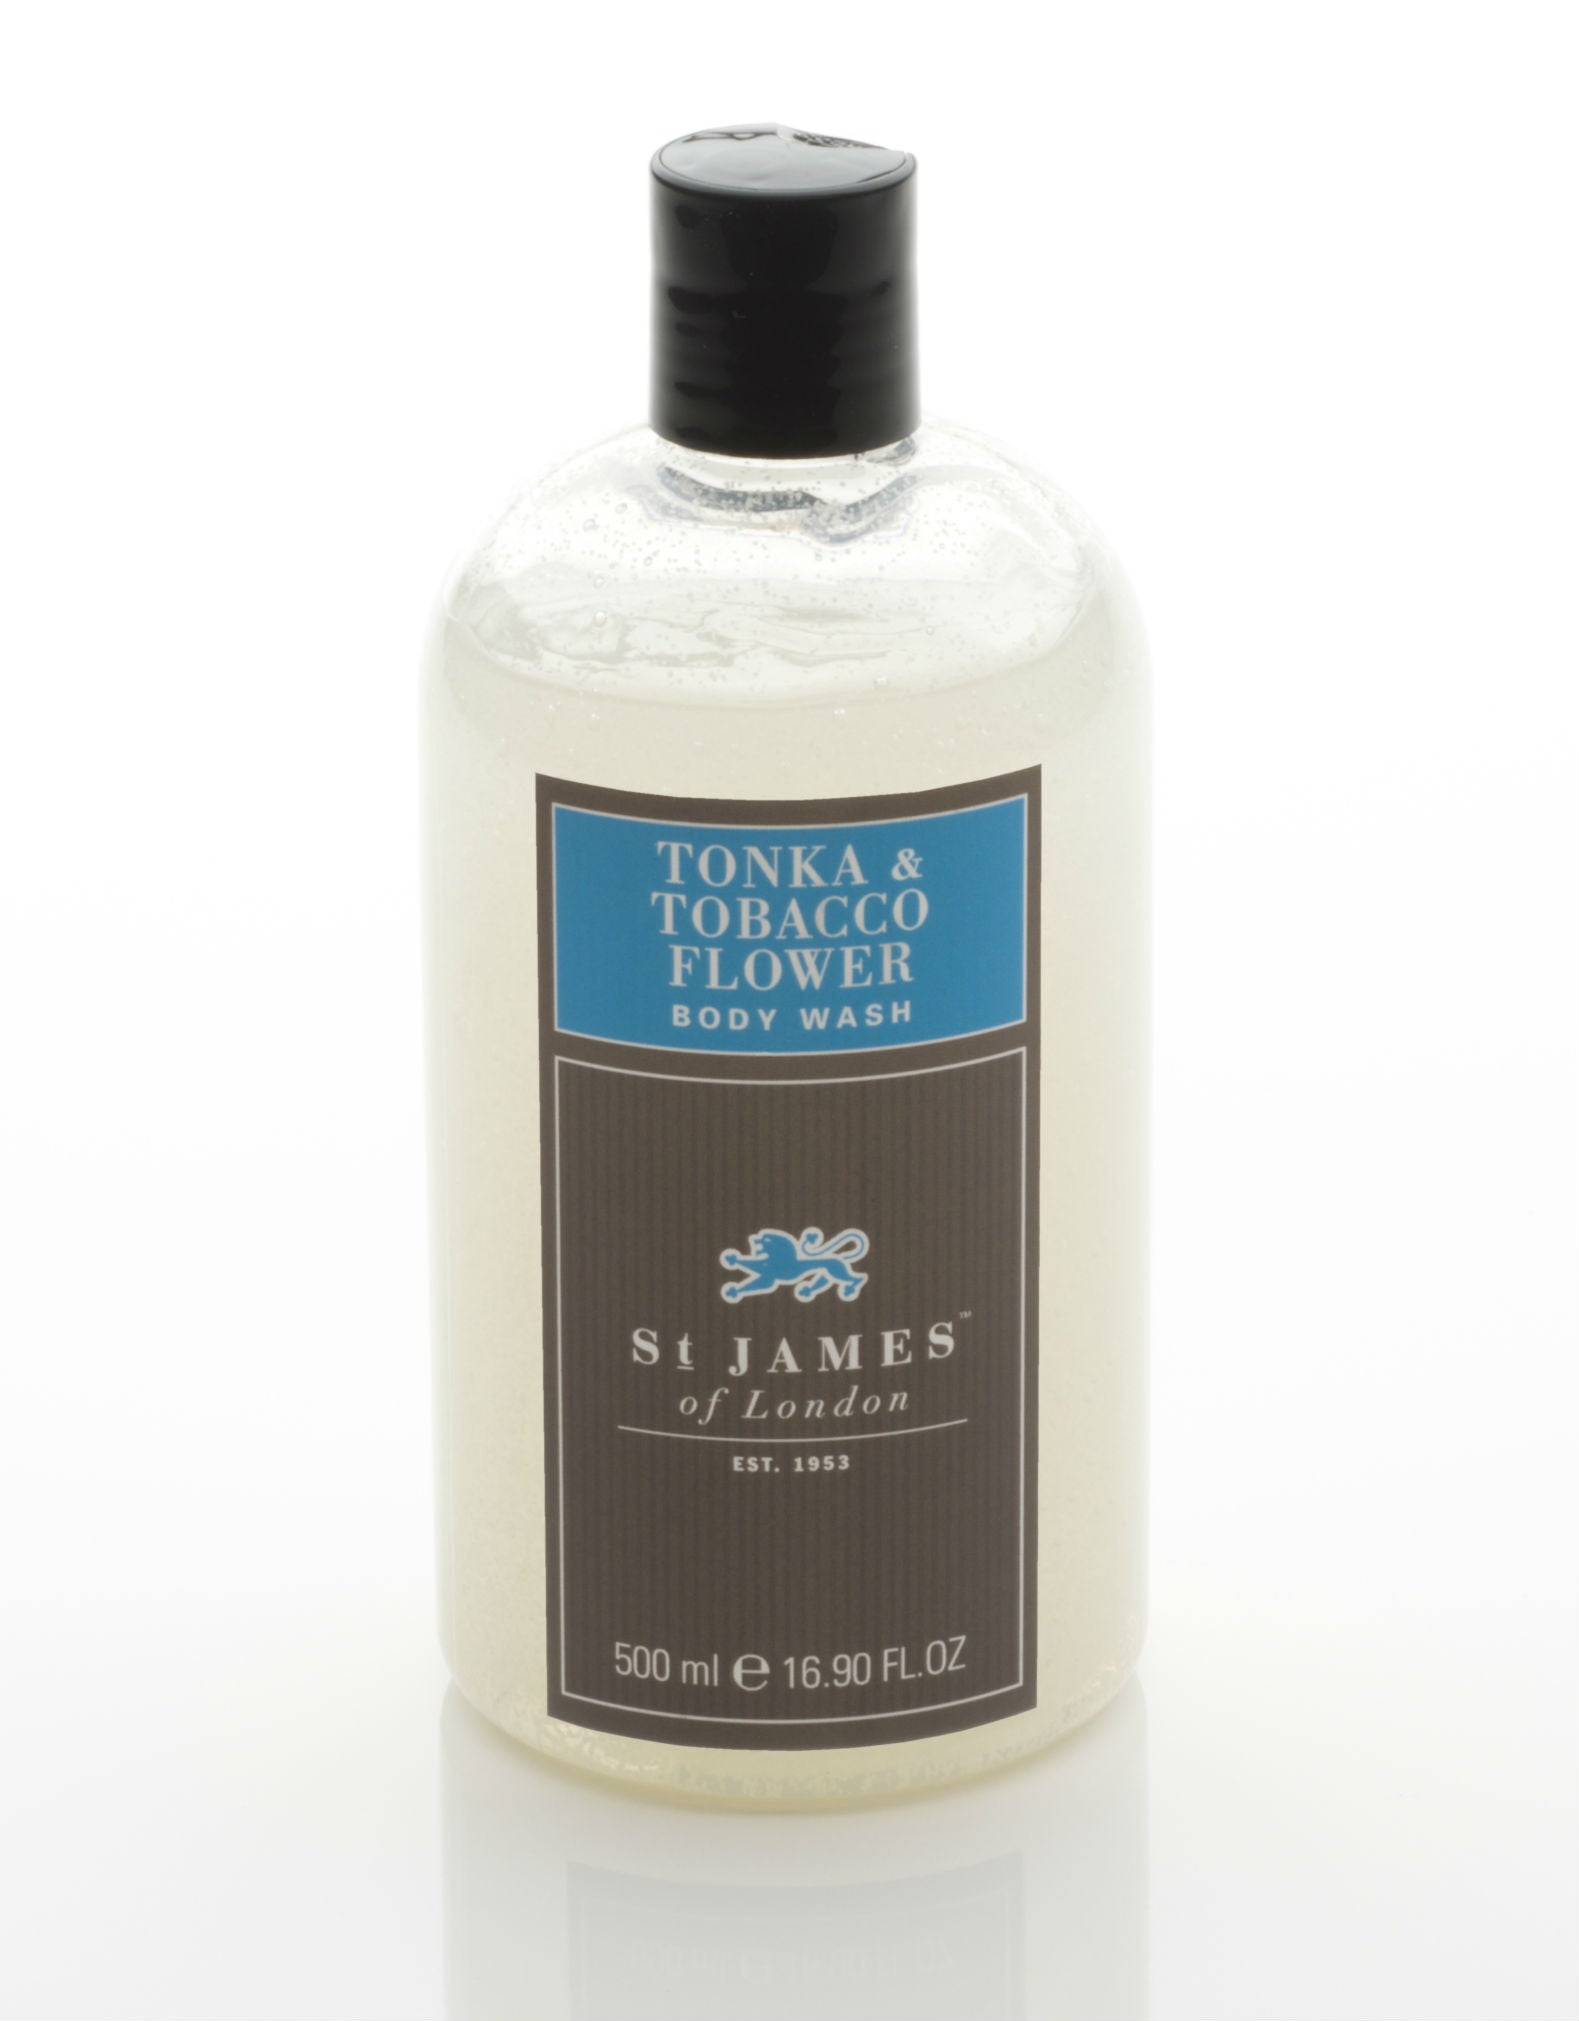 St. James of London - Tonka & Tobacco Flower Body Wash